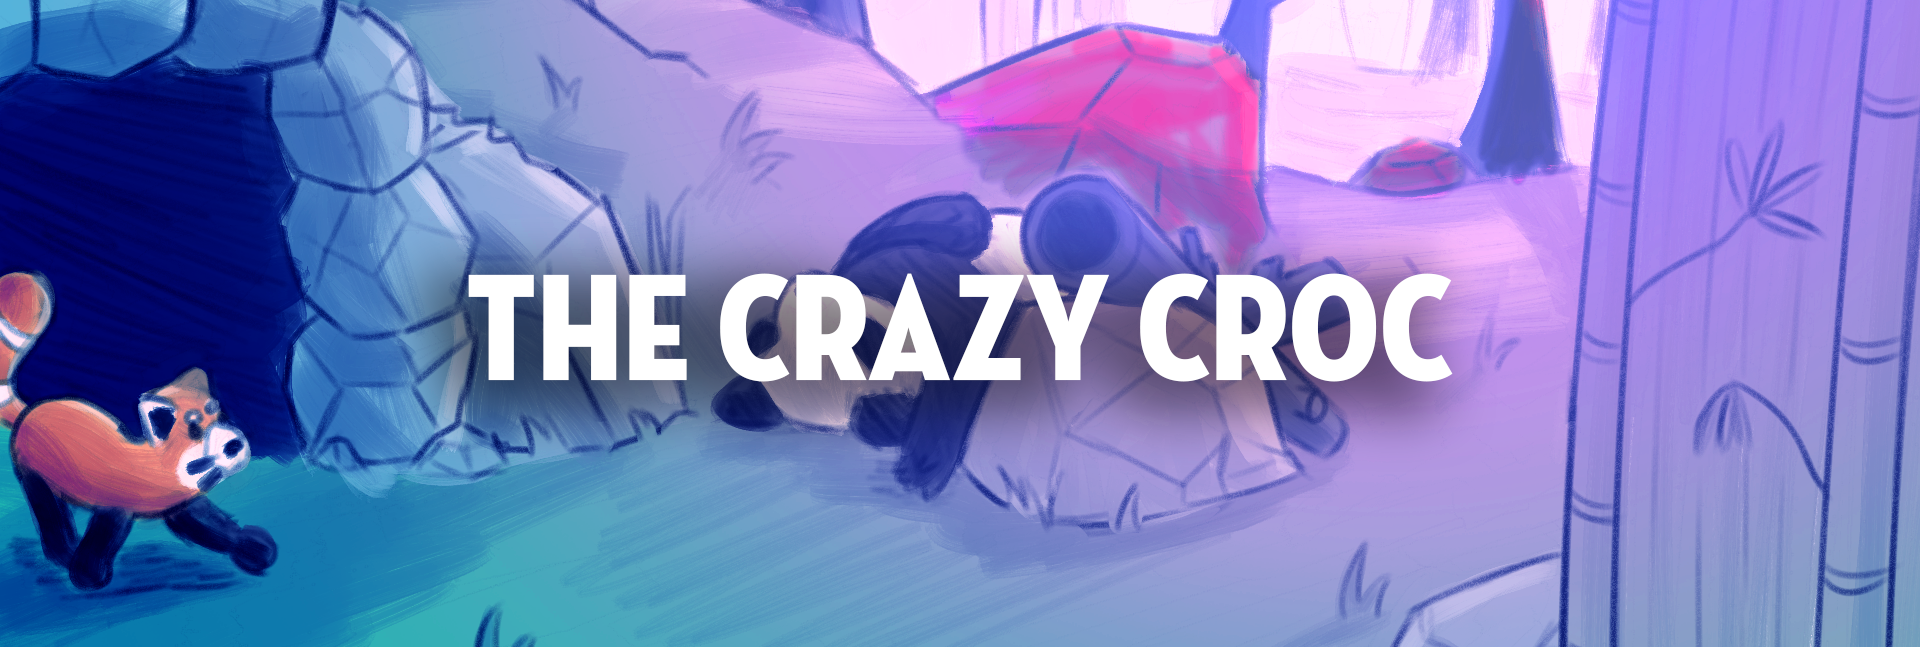 The Crazy Croc